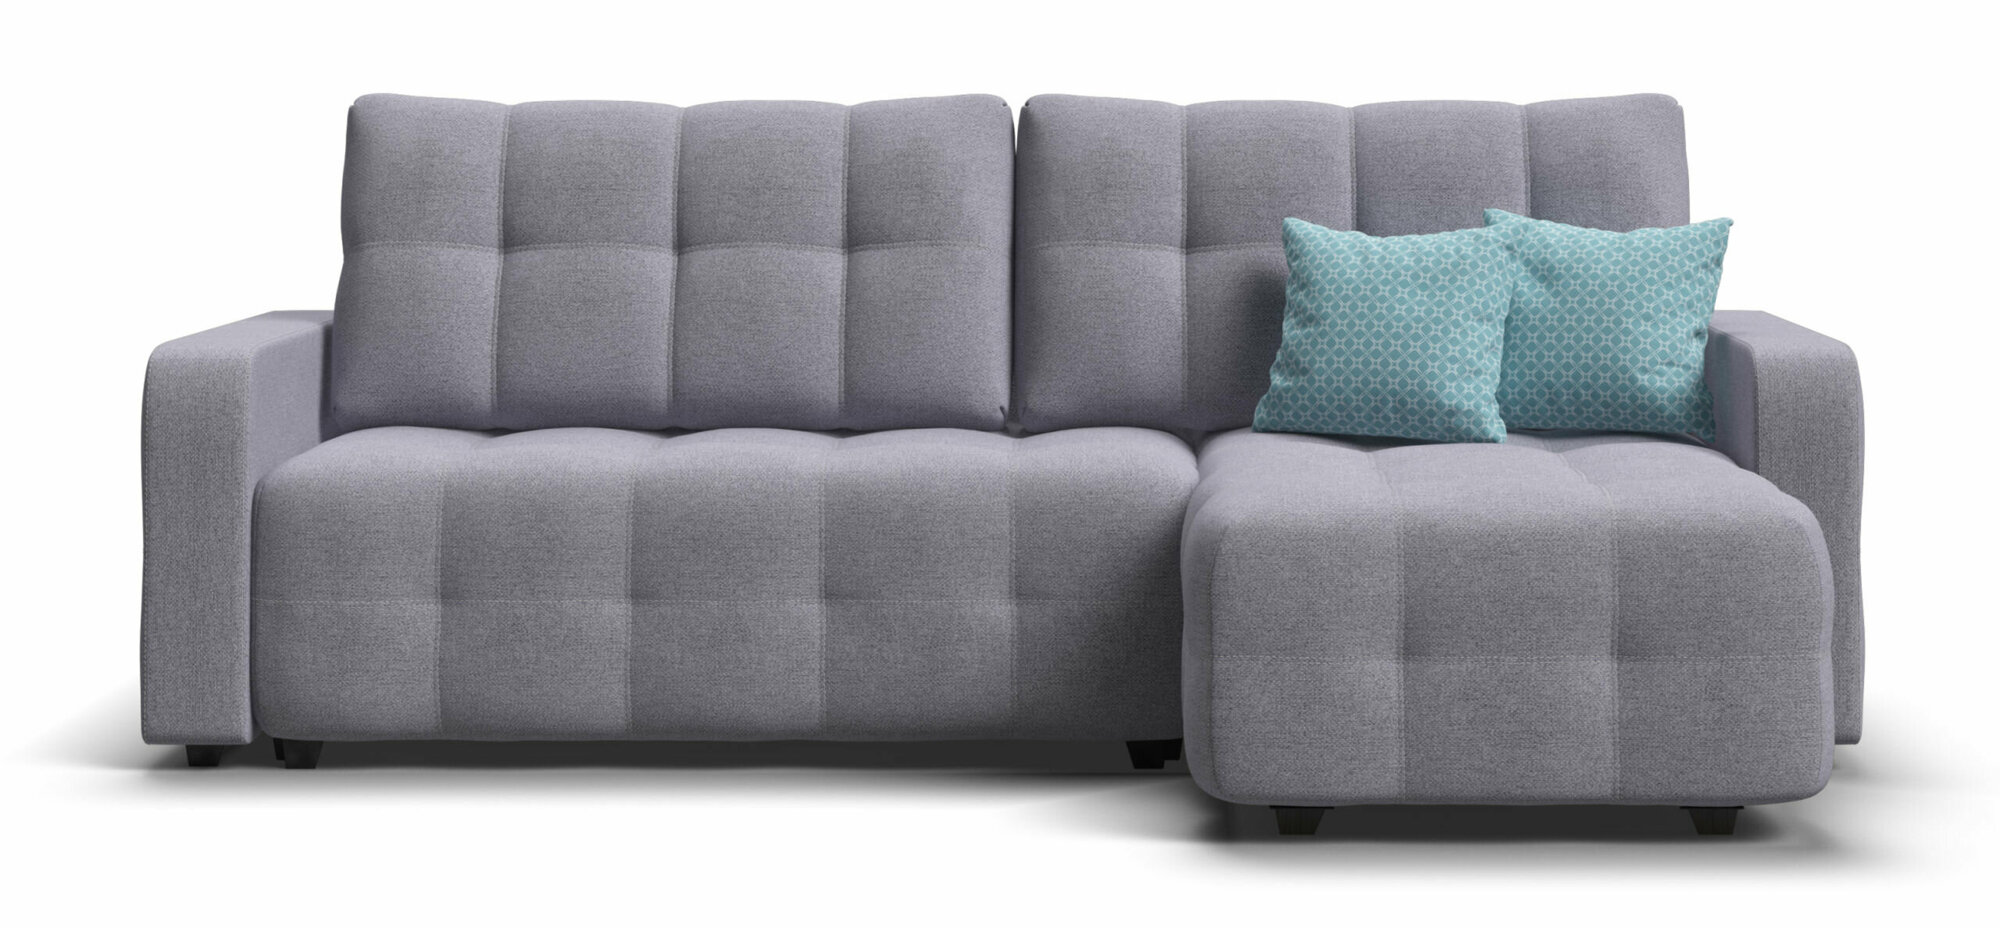 Угловой диван Много мебели Dandy 2.0, рогожка Malmo платина, 235х165х89 см